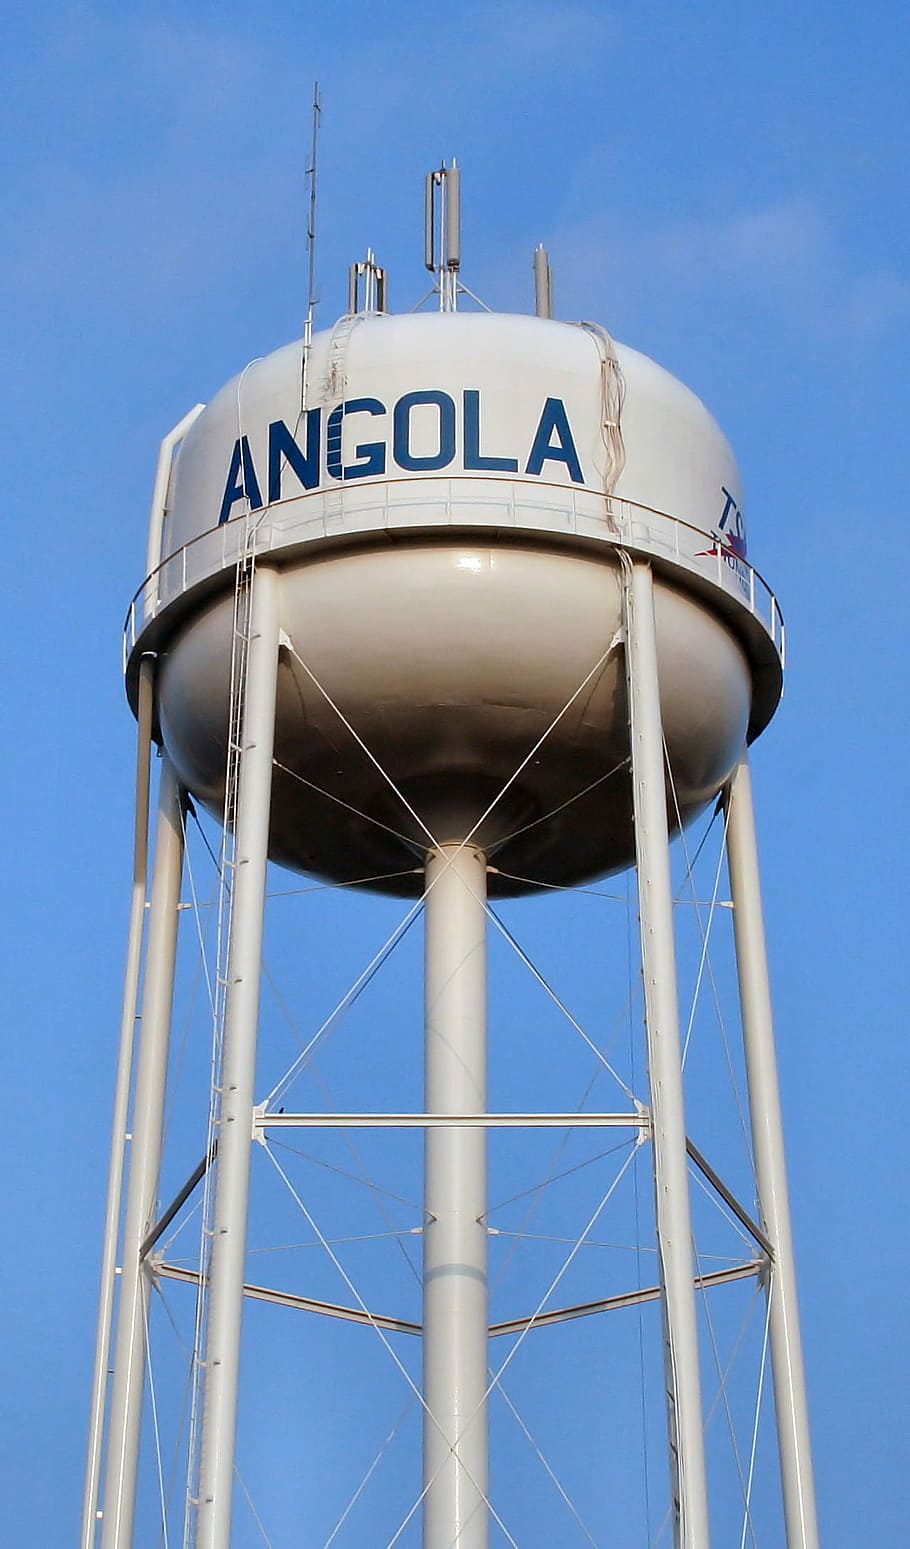 Torre de agua de Angola, Angola, Torre de agua, Indiana, dominio público, estructura, Torre de agua - Tanque de almacenamiento, azul, torre, cielo